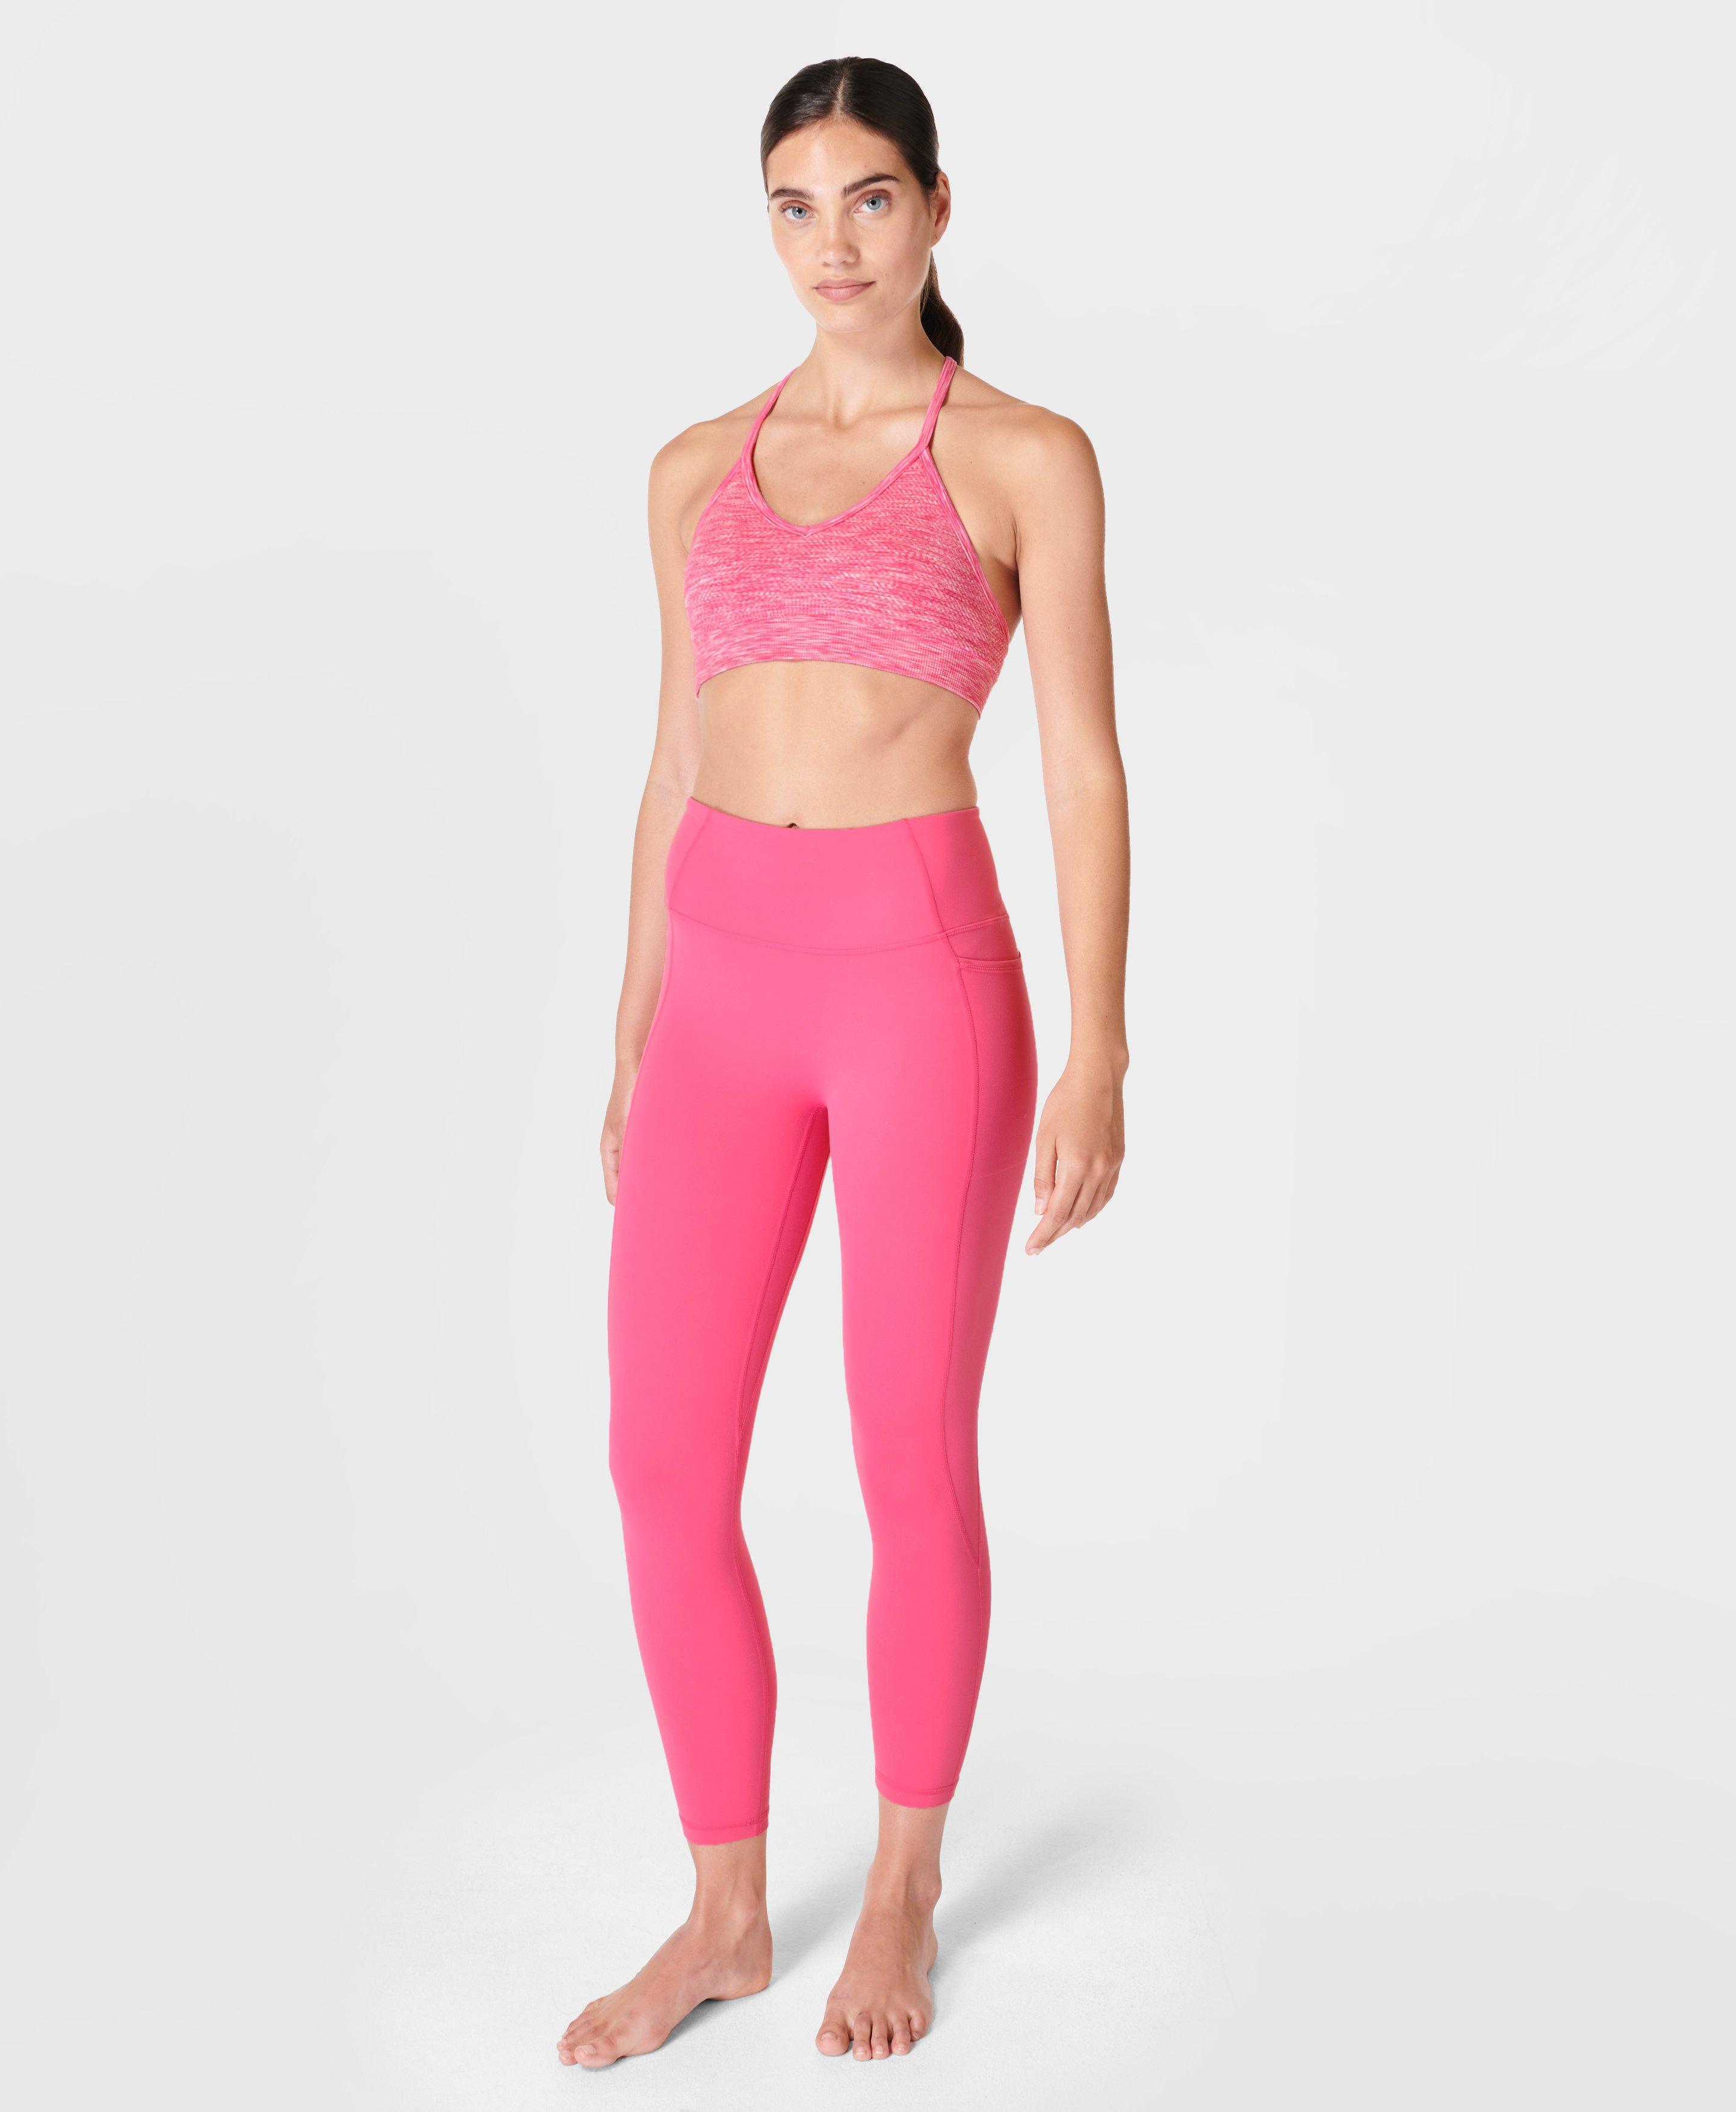 Sweaty Betty Stamina Dusty Rose Pink Compression Yoga Running Bra Medium M  - $29 - From Fried